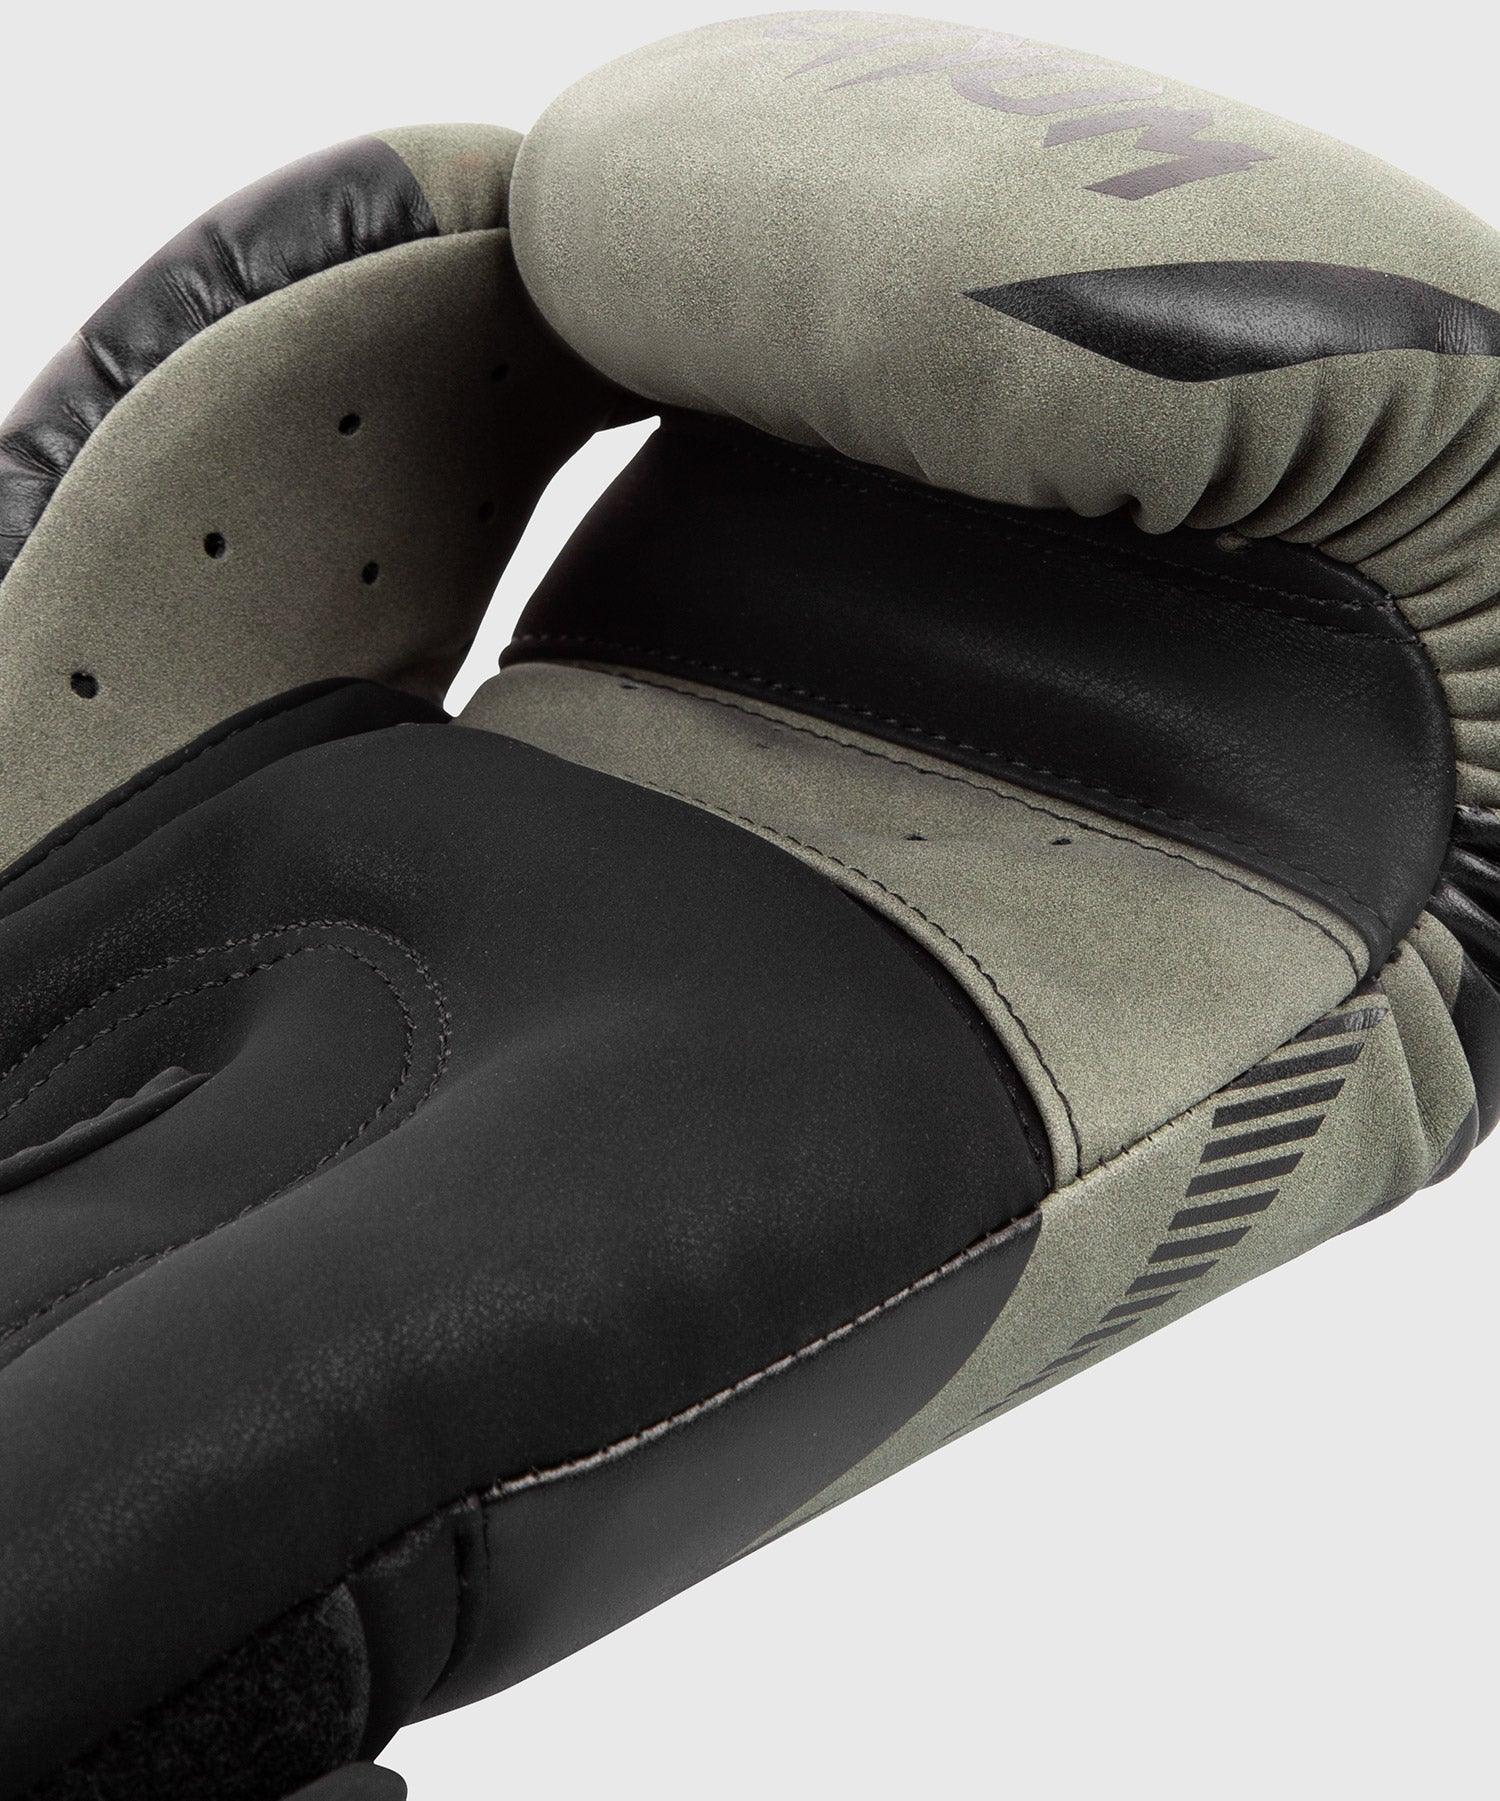 Venum Impact Boxing Gloves - Khaki/Black - Venum